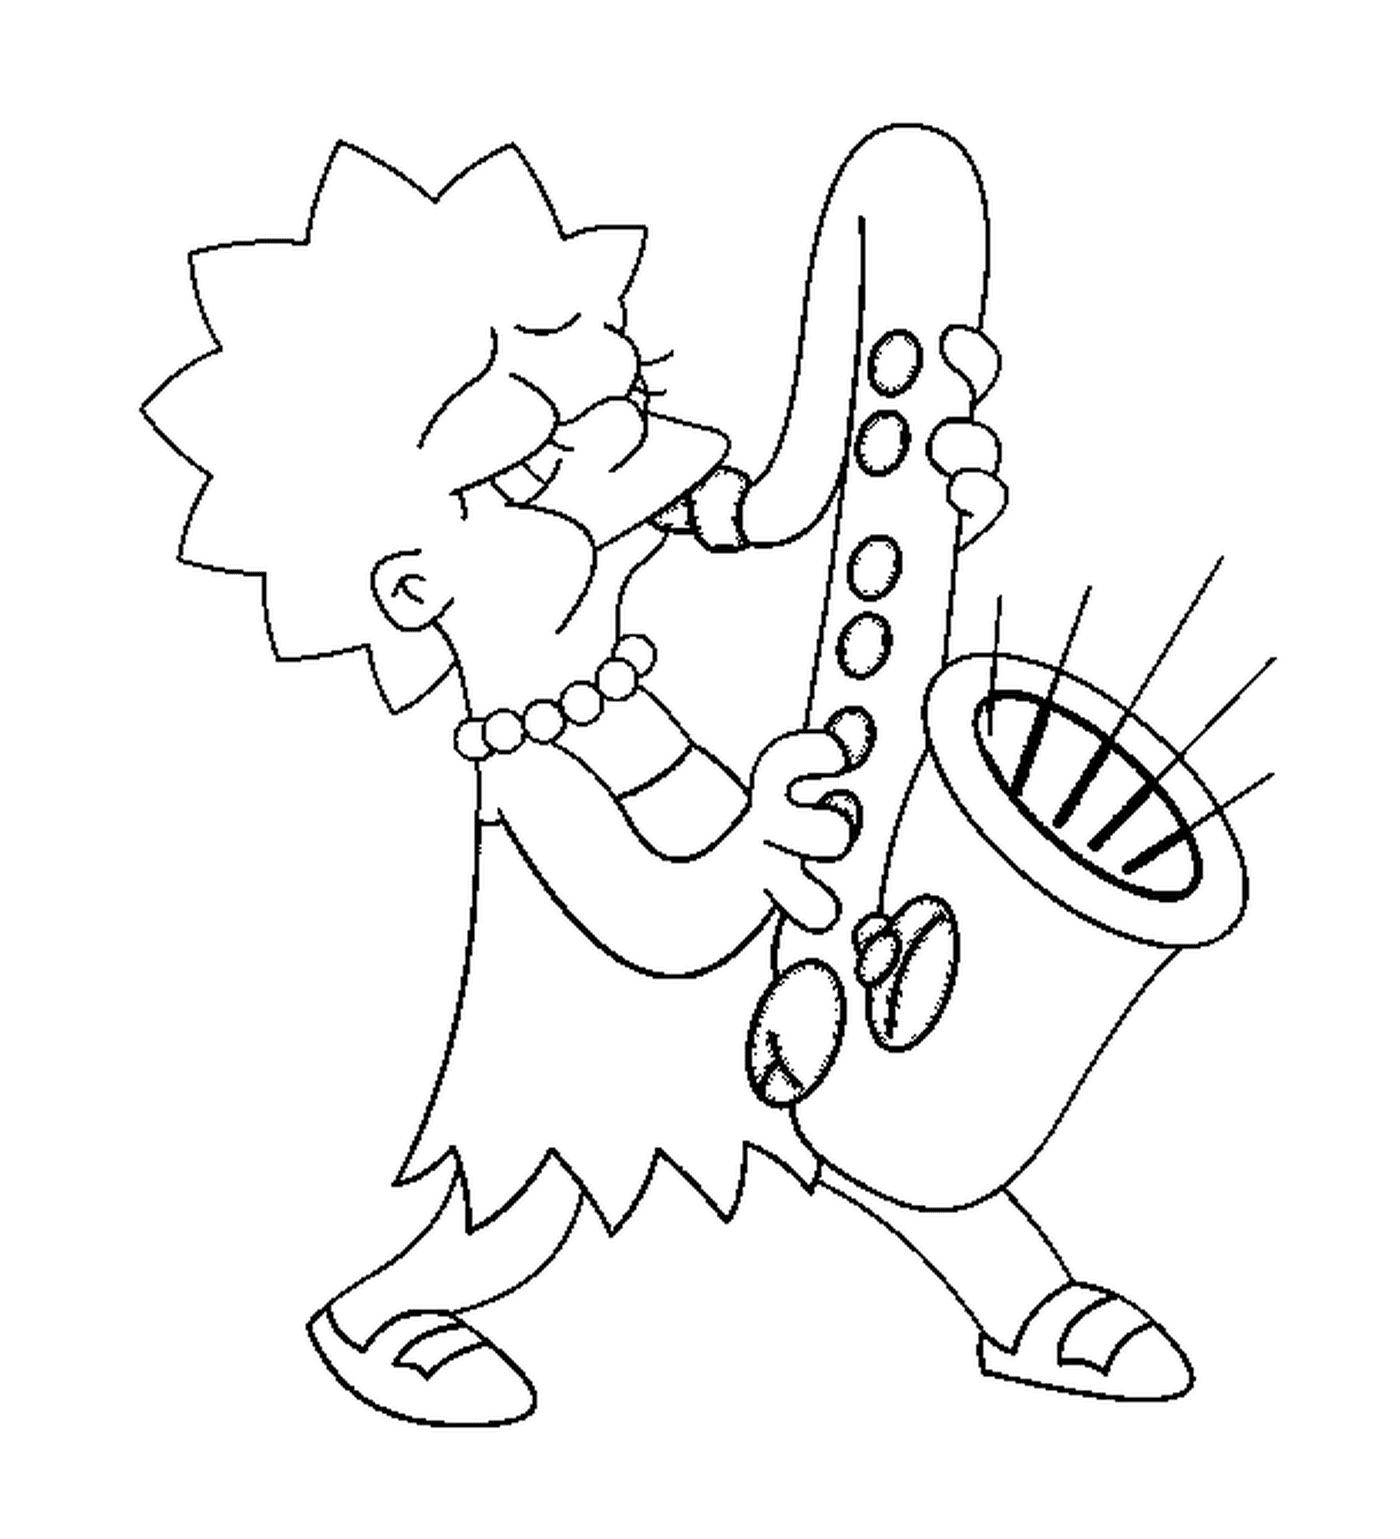   Lisa joue du saxophone harmonieux 